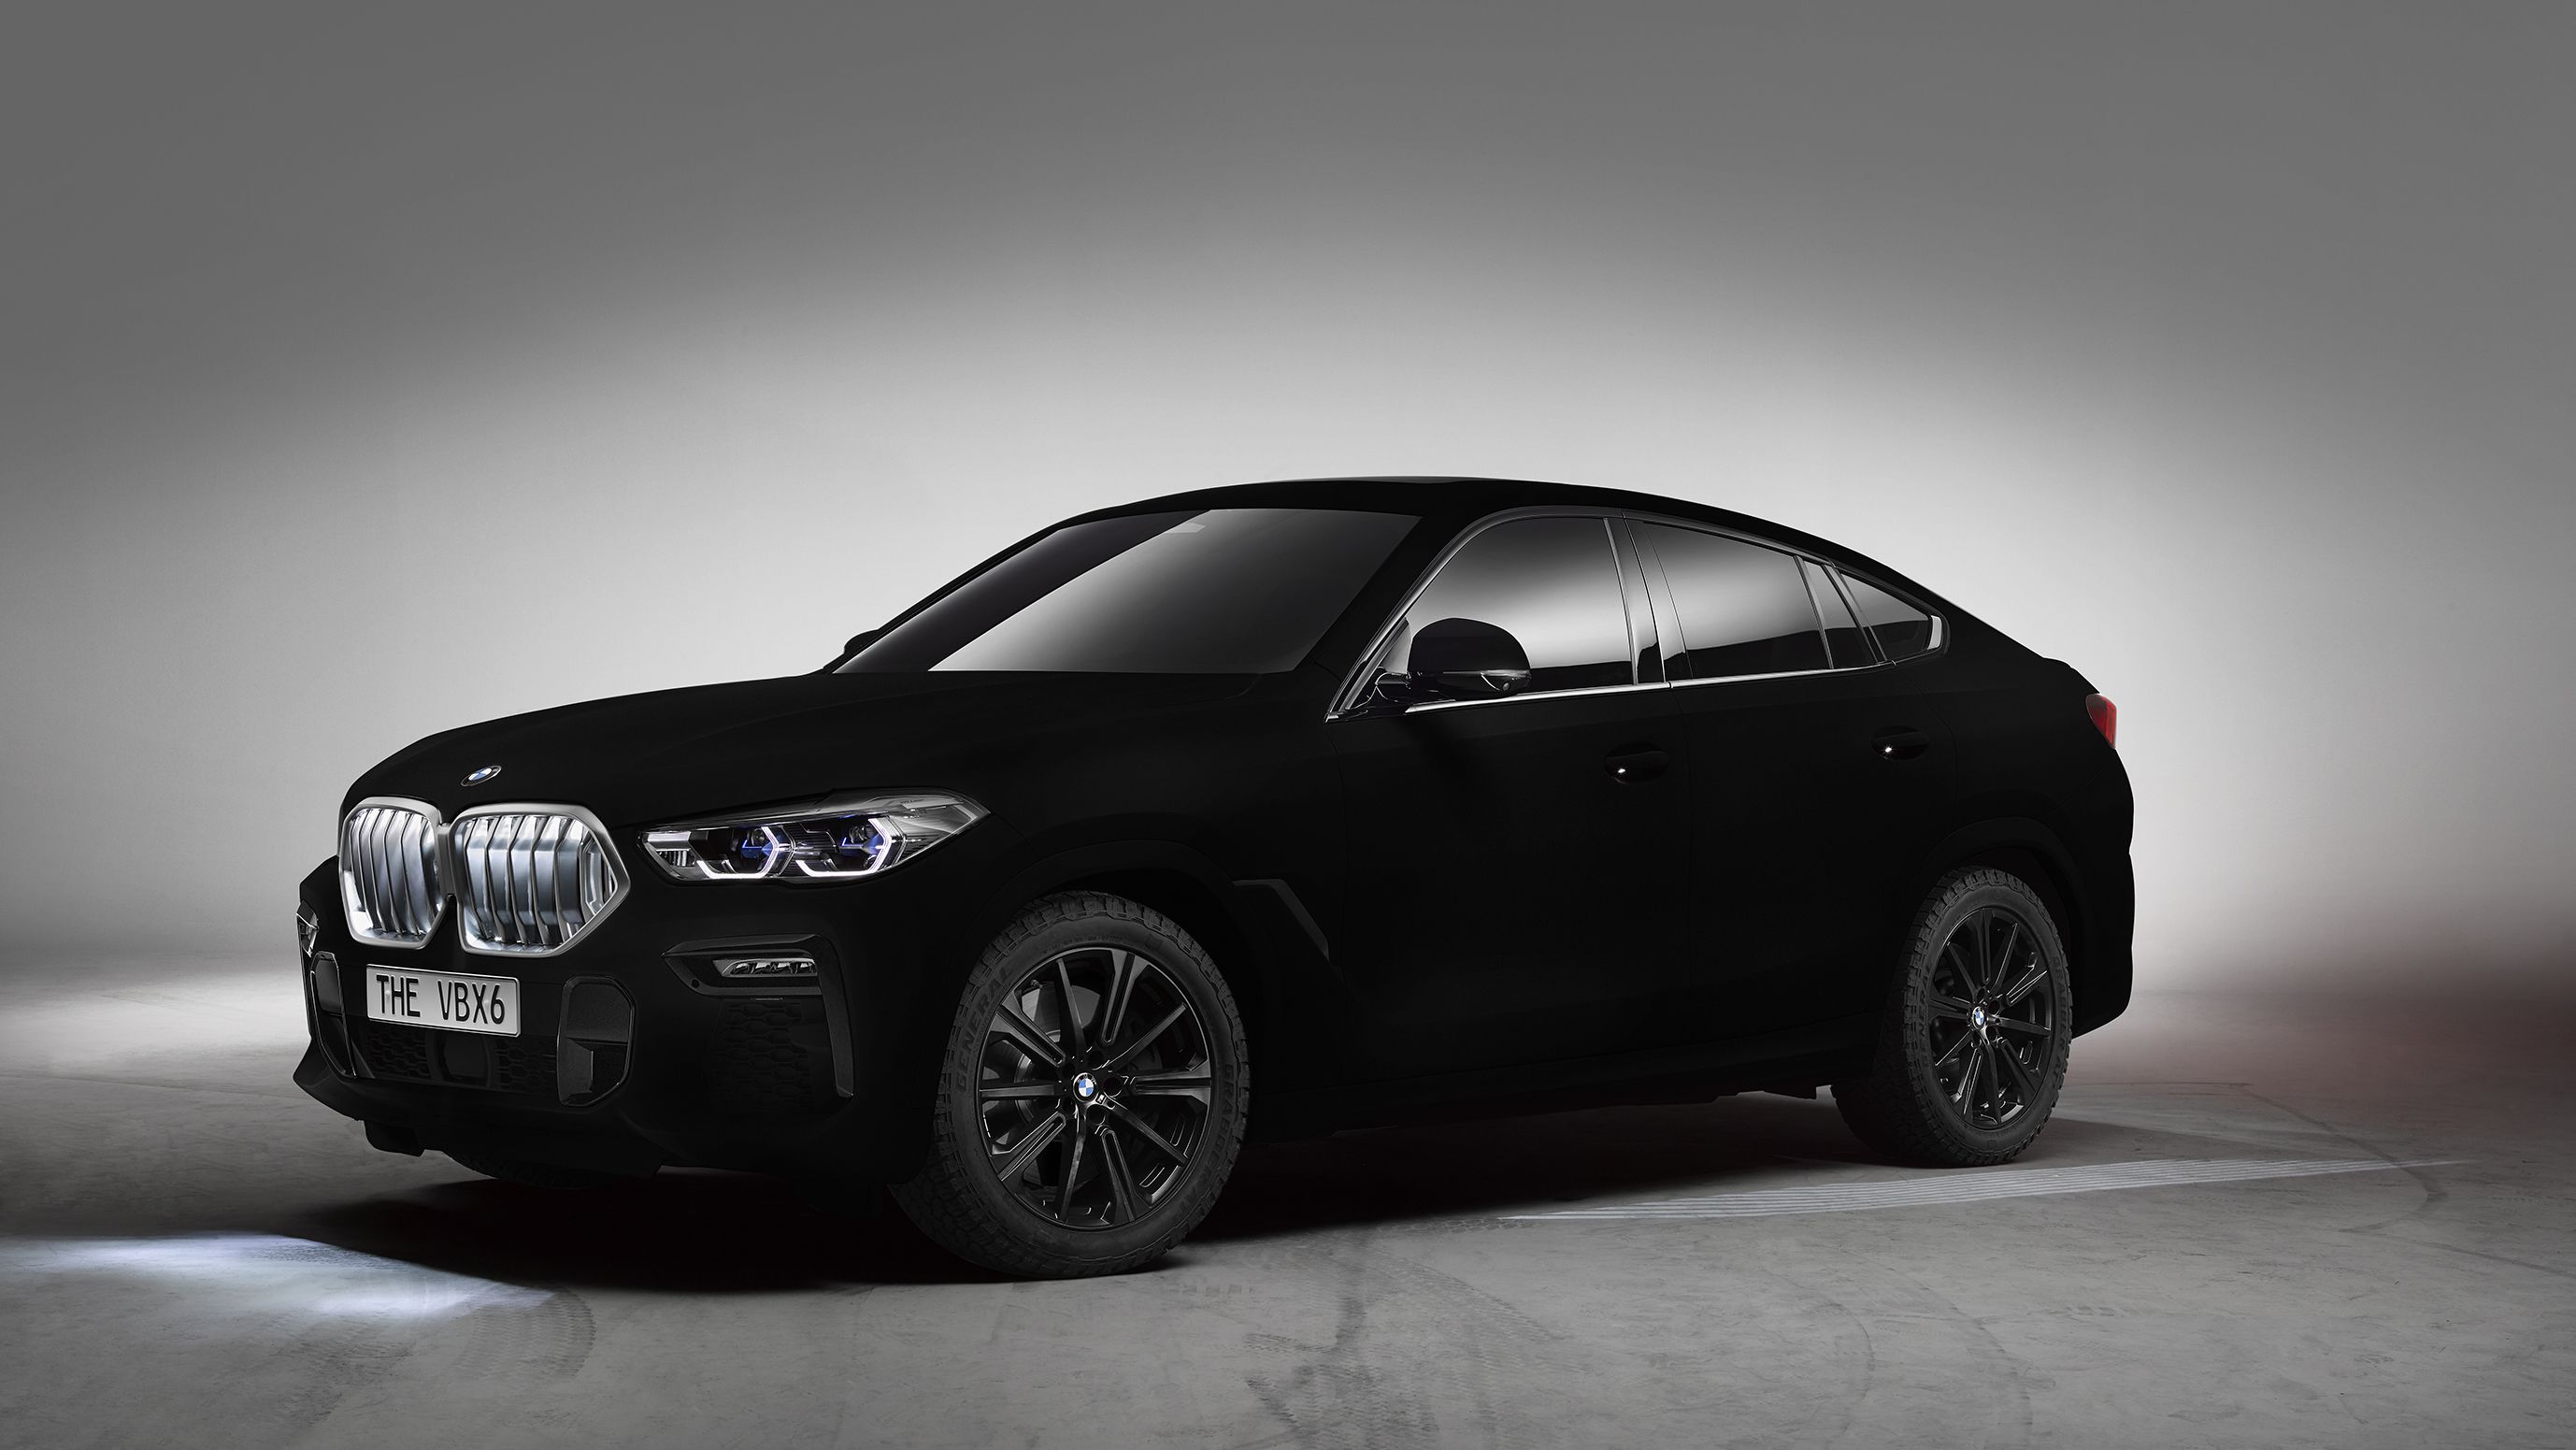 BMW X6 Coupé in Vantablack: World's Blackest Black